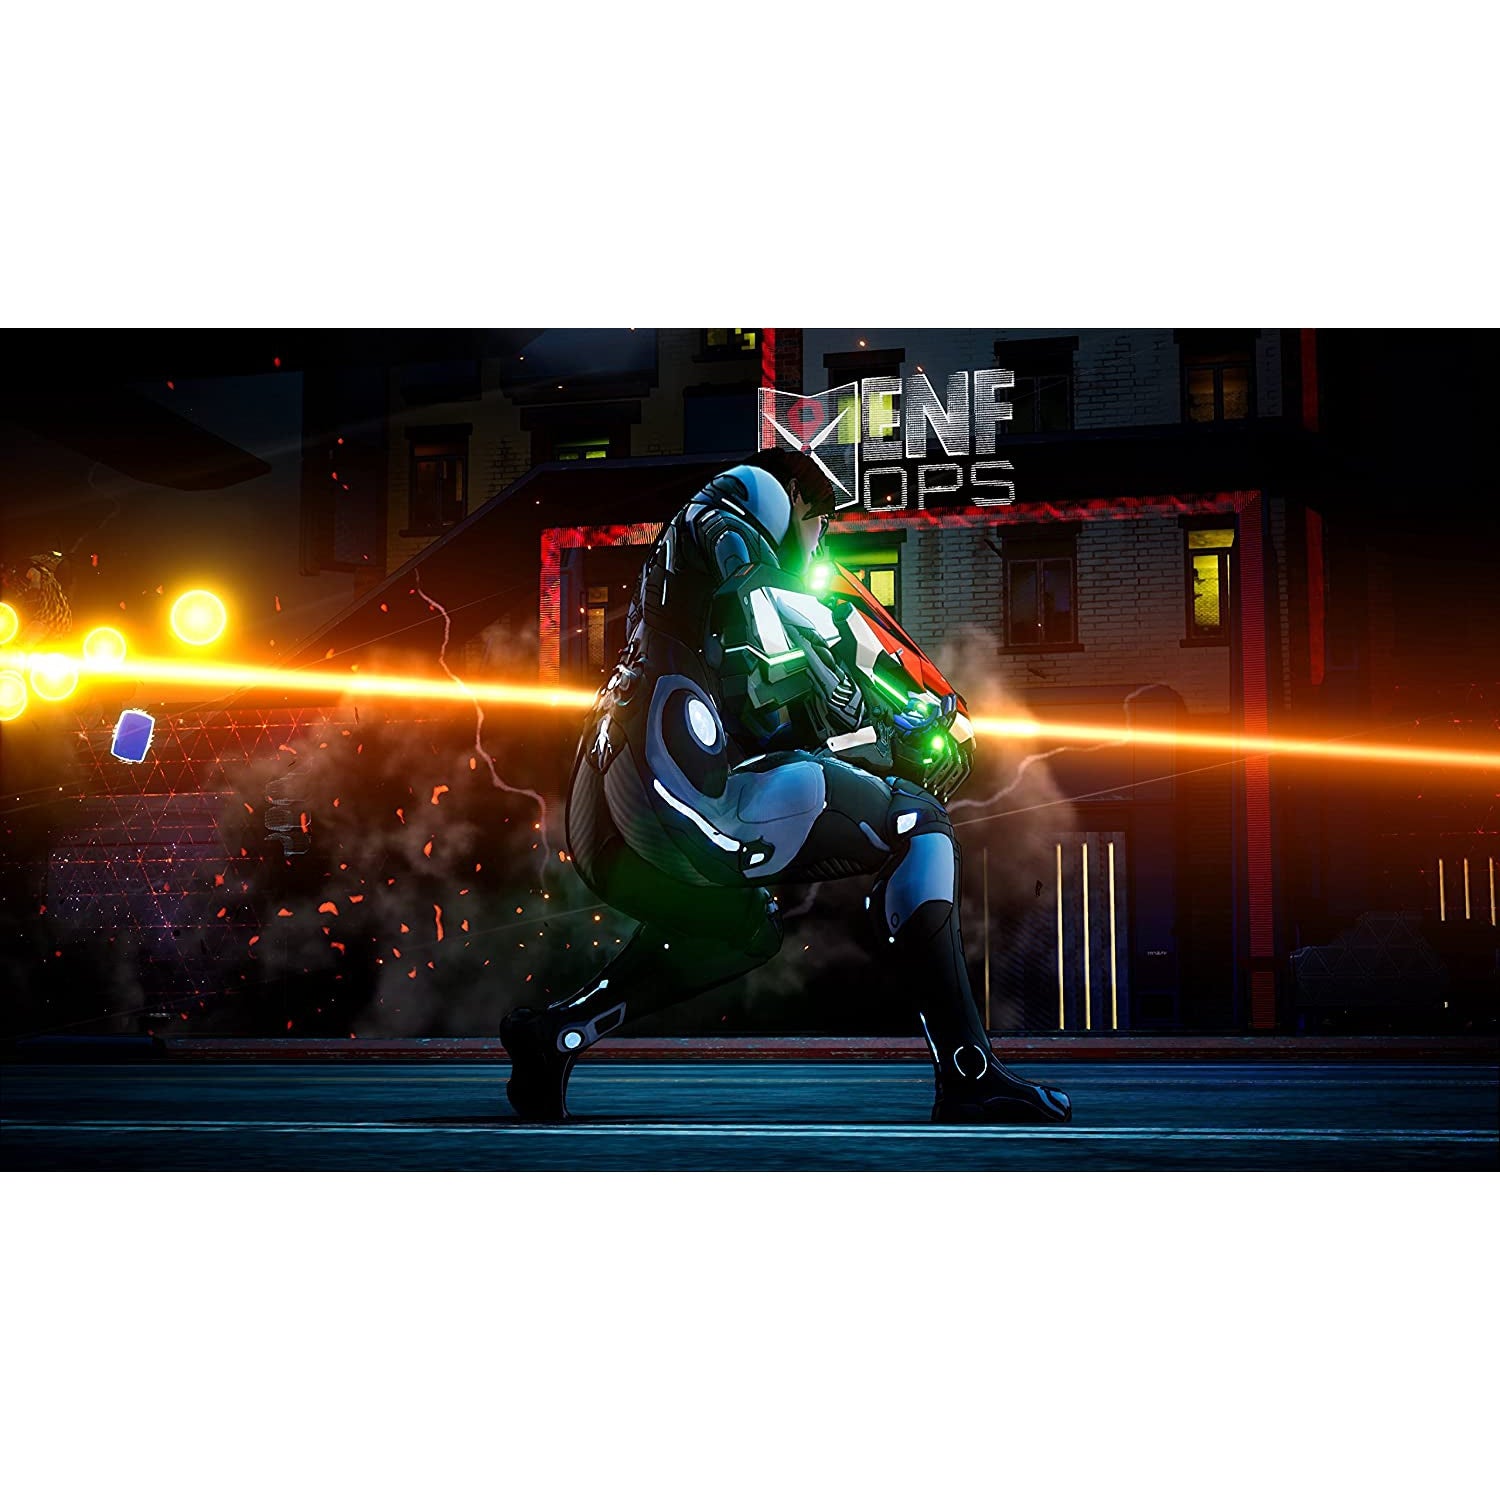 Crackdown 3 (Xbox One) Video Game - Grade A